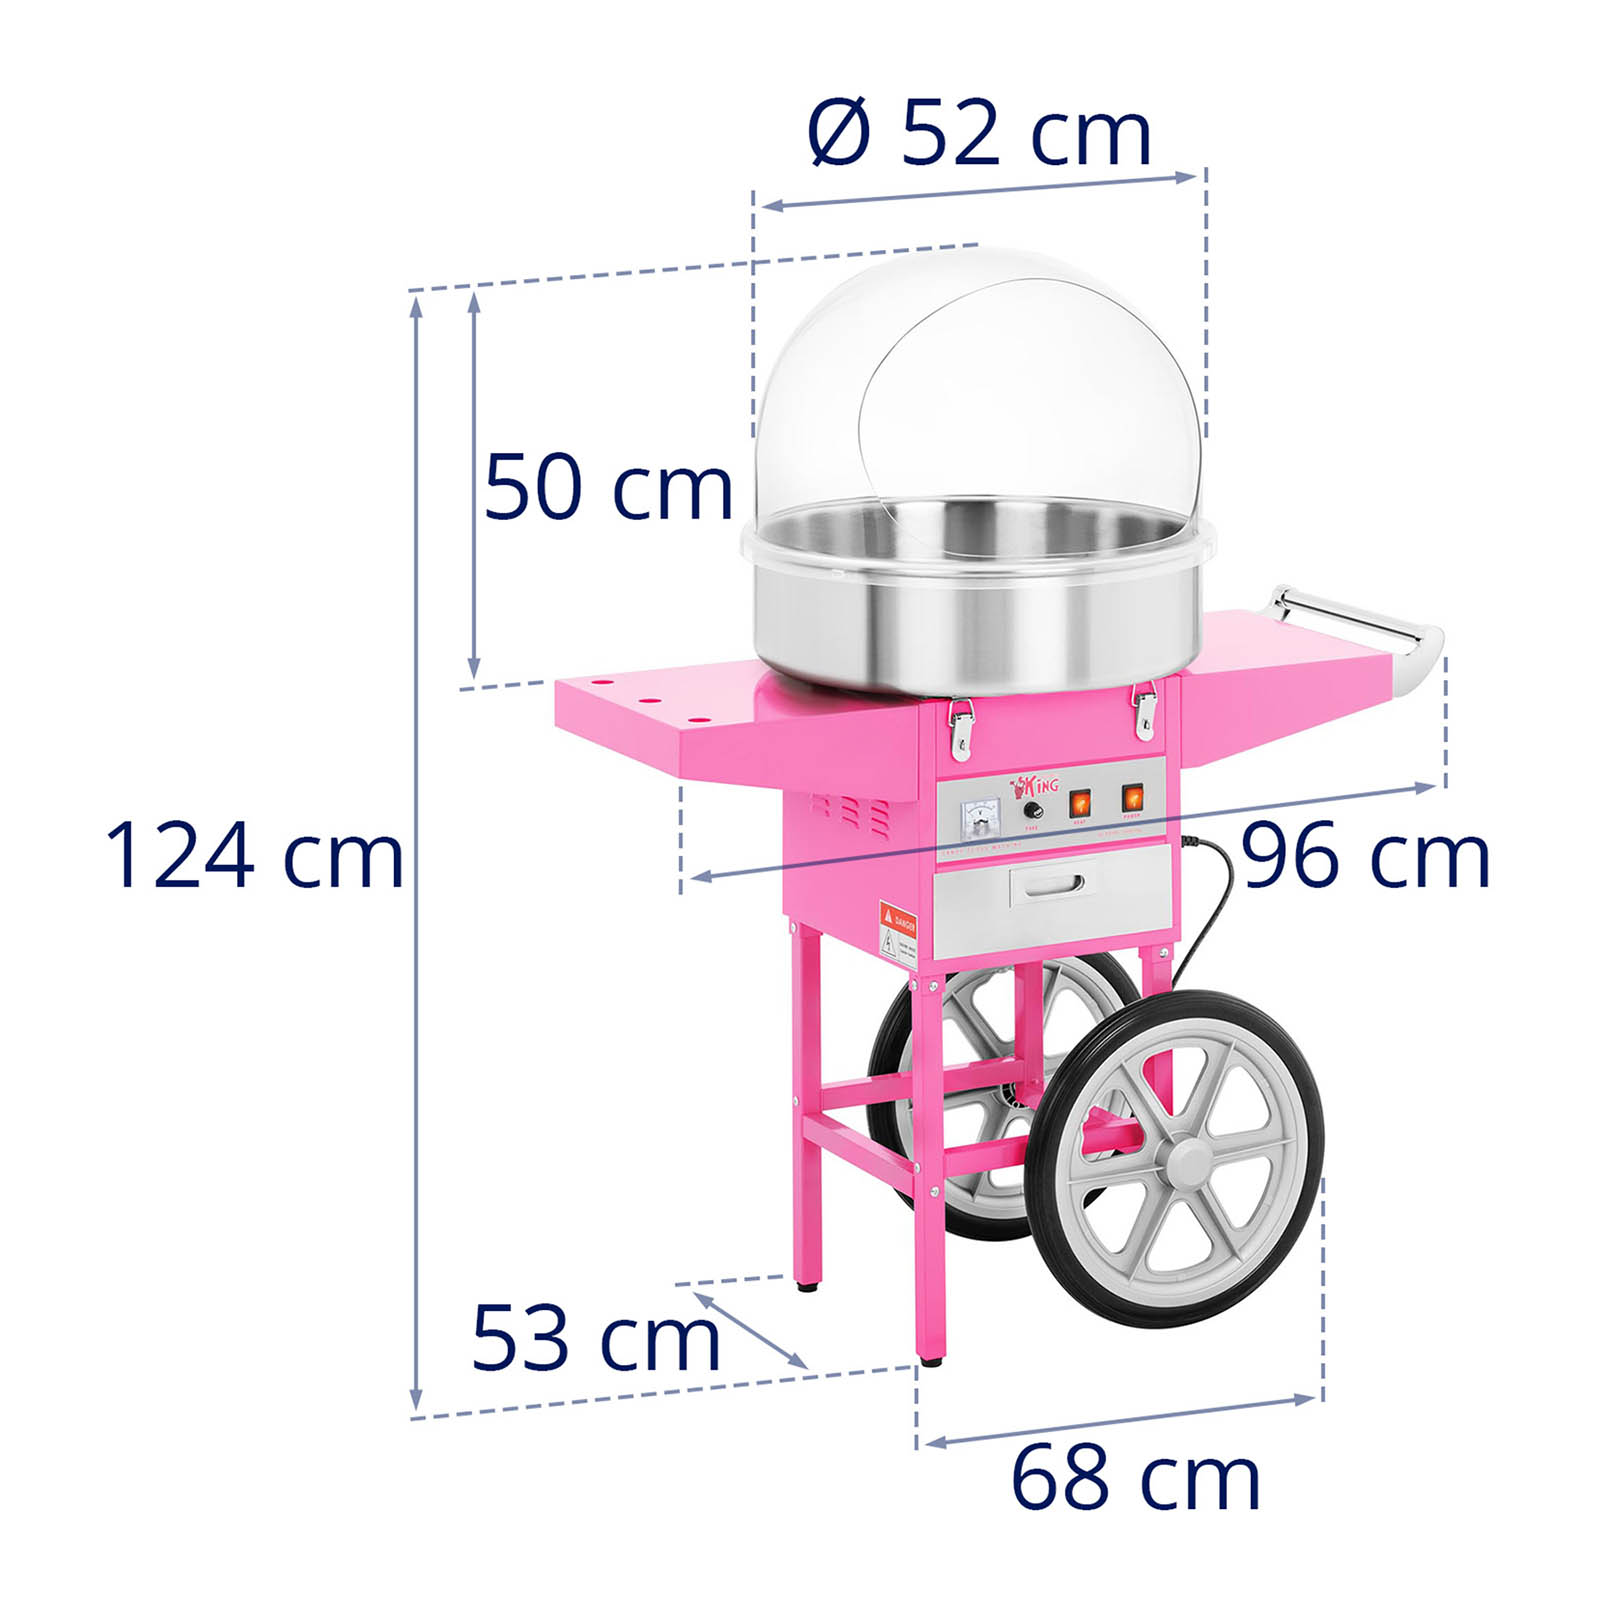 Cotton candy machine set - 52 cm - 1,200 W